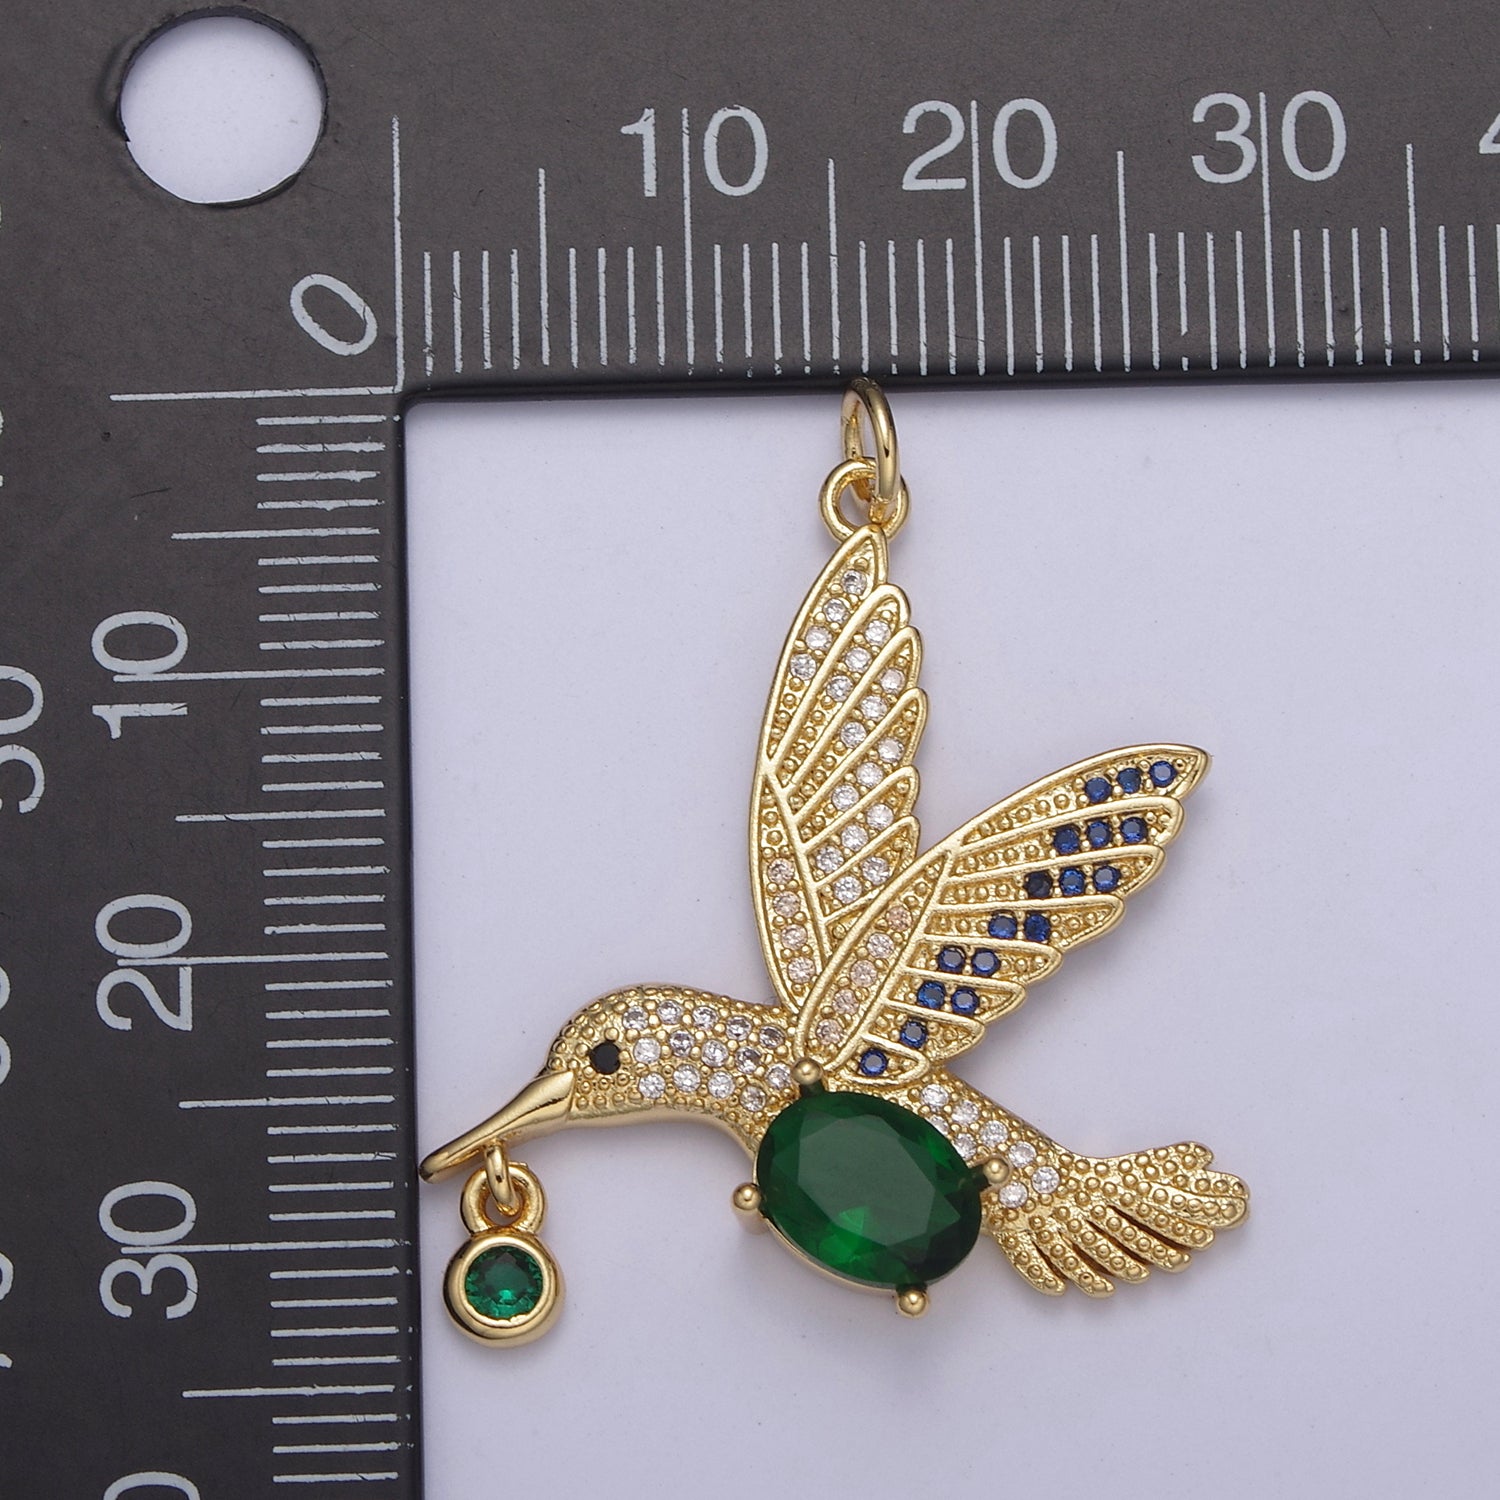 Gold Hummingbird Charm 24k Gold Filled Humming Bird Pendant 36mmx28.1mm gold Green Cz Animal jewelry - DLUXCA